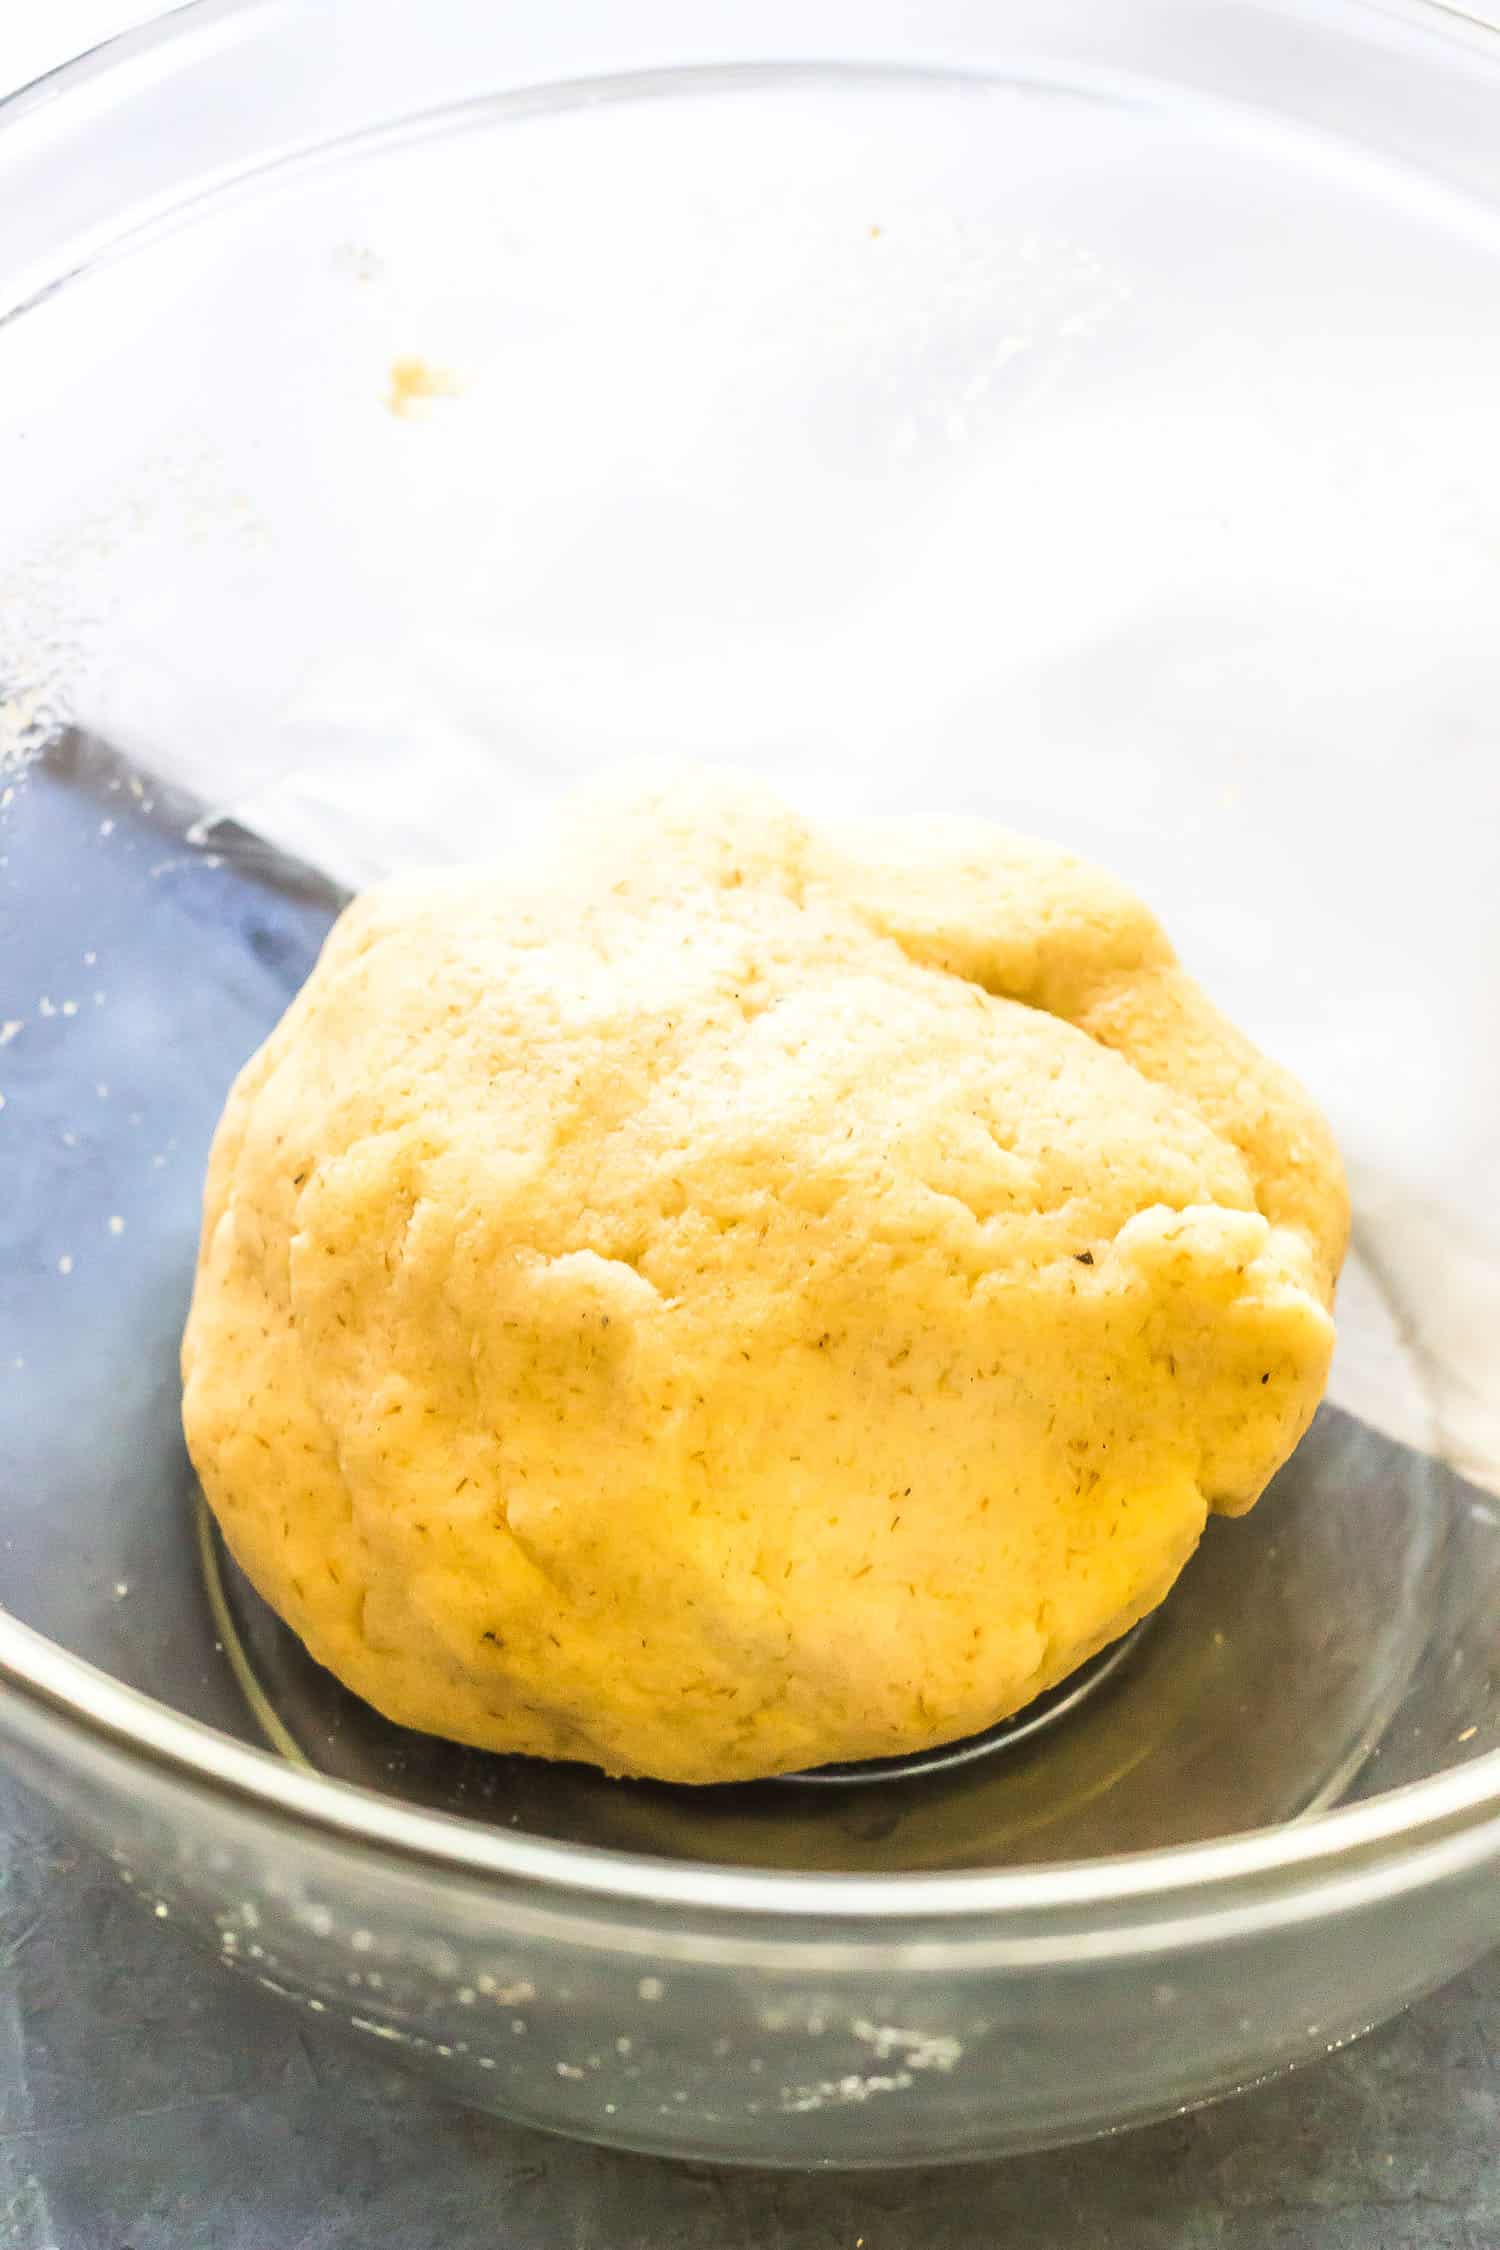 Keto Naan dough mixed up into a ball in a glass bowl